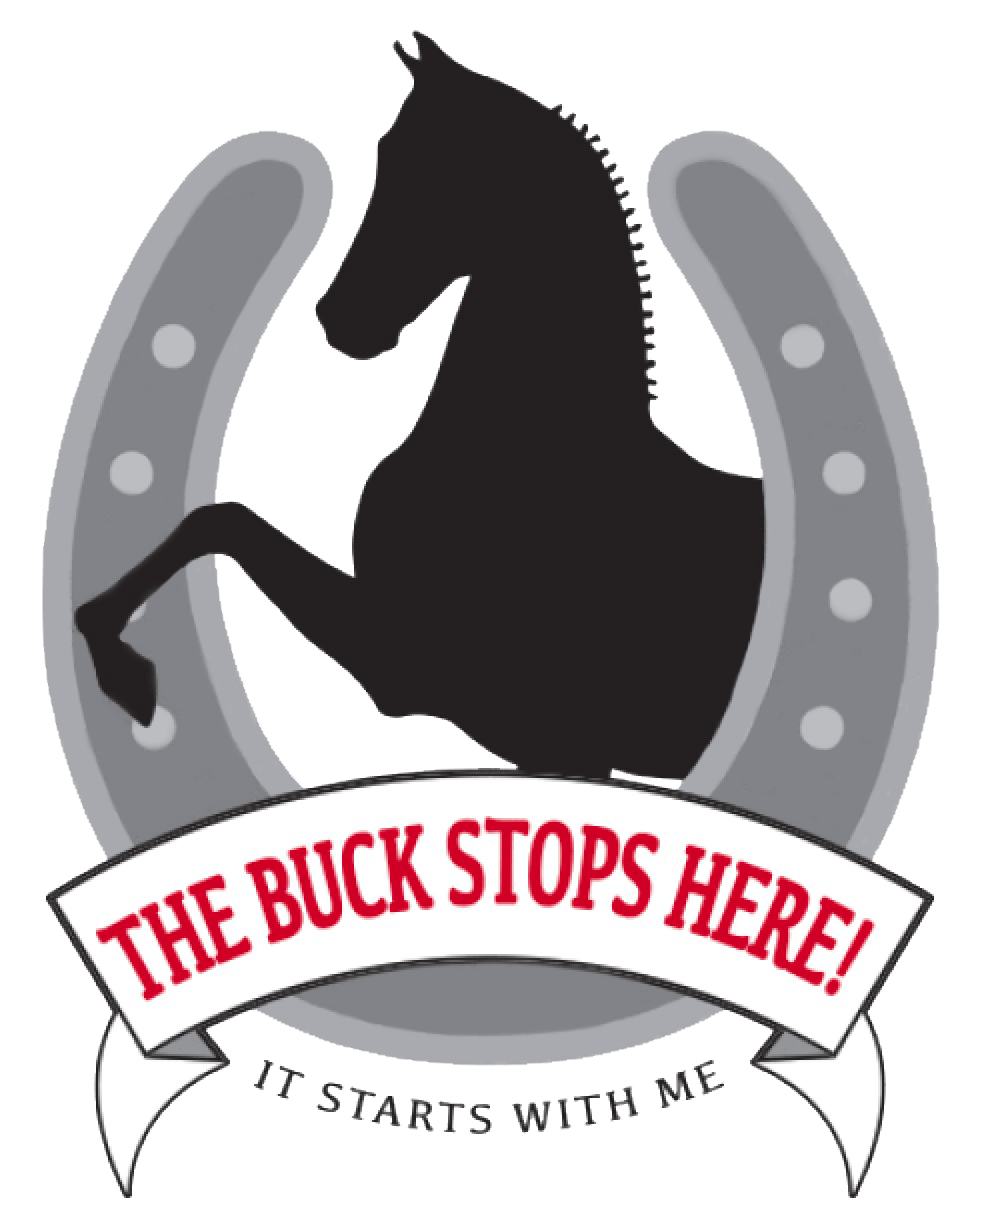 The Buck Stops Here logo